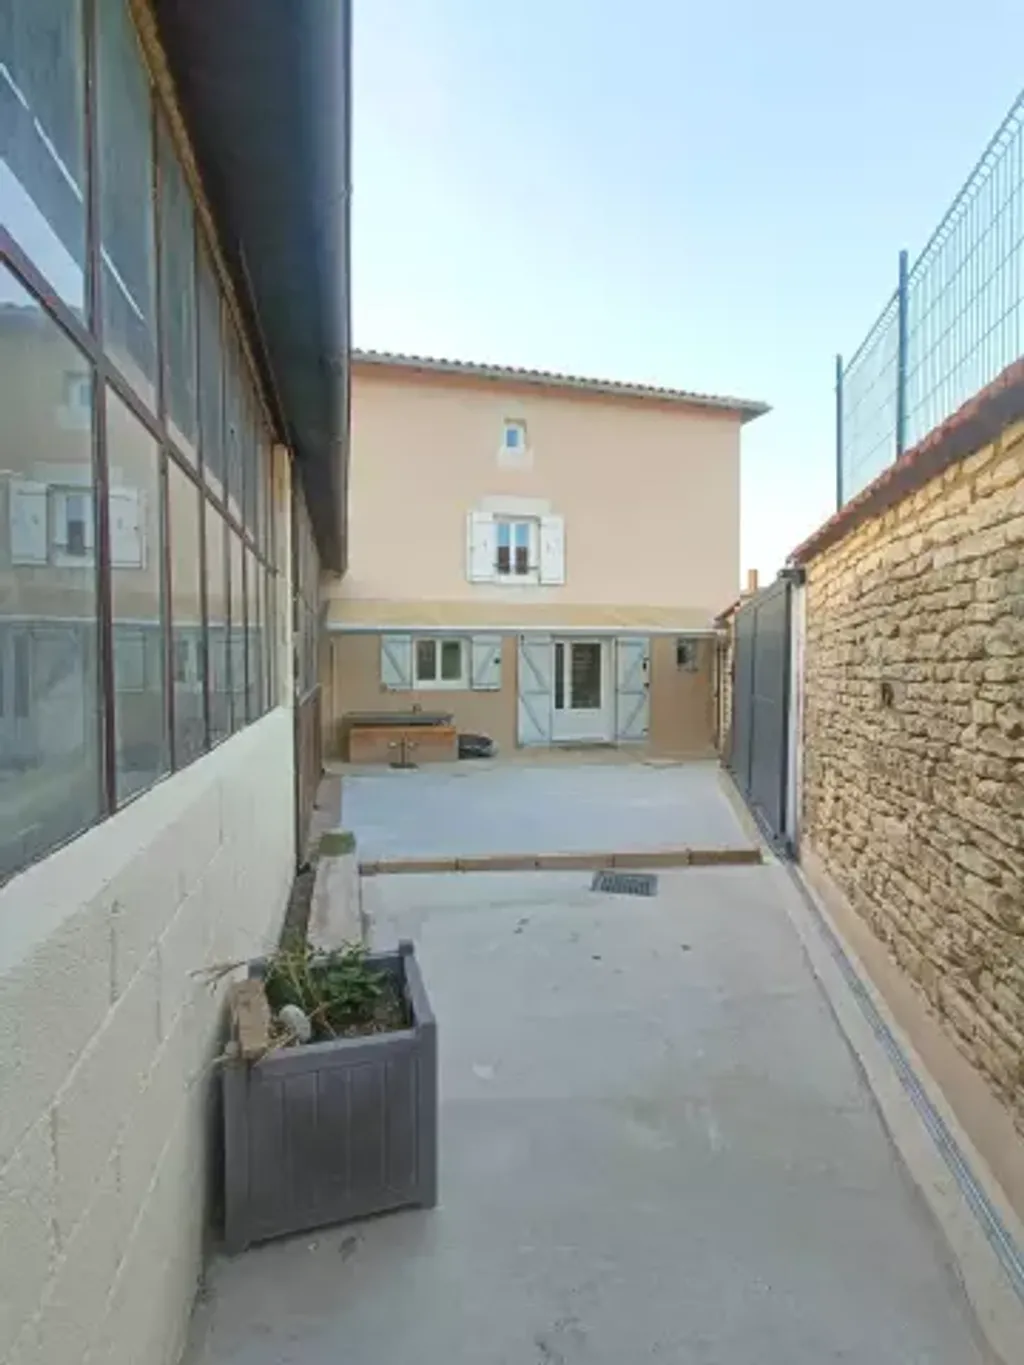 Achat maison à vendre 3 chambres 125 m² - Saint-Martin-la-Pallu